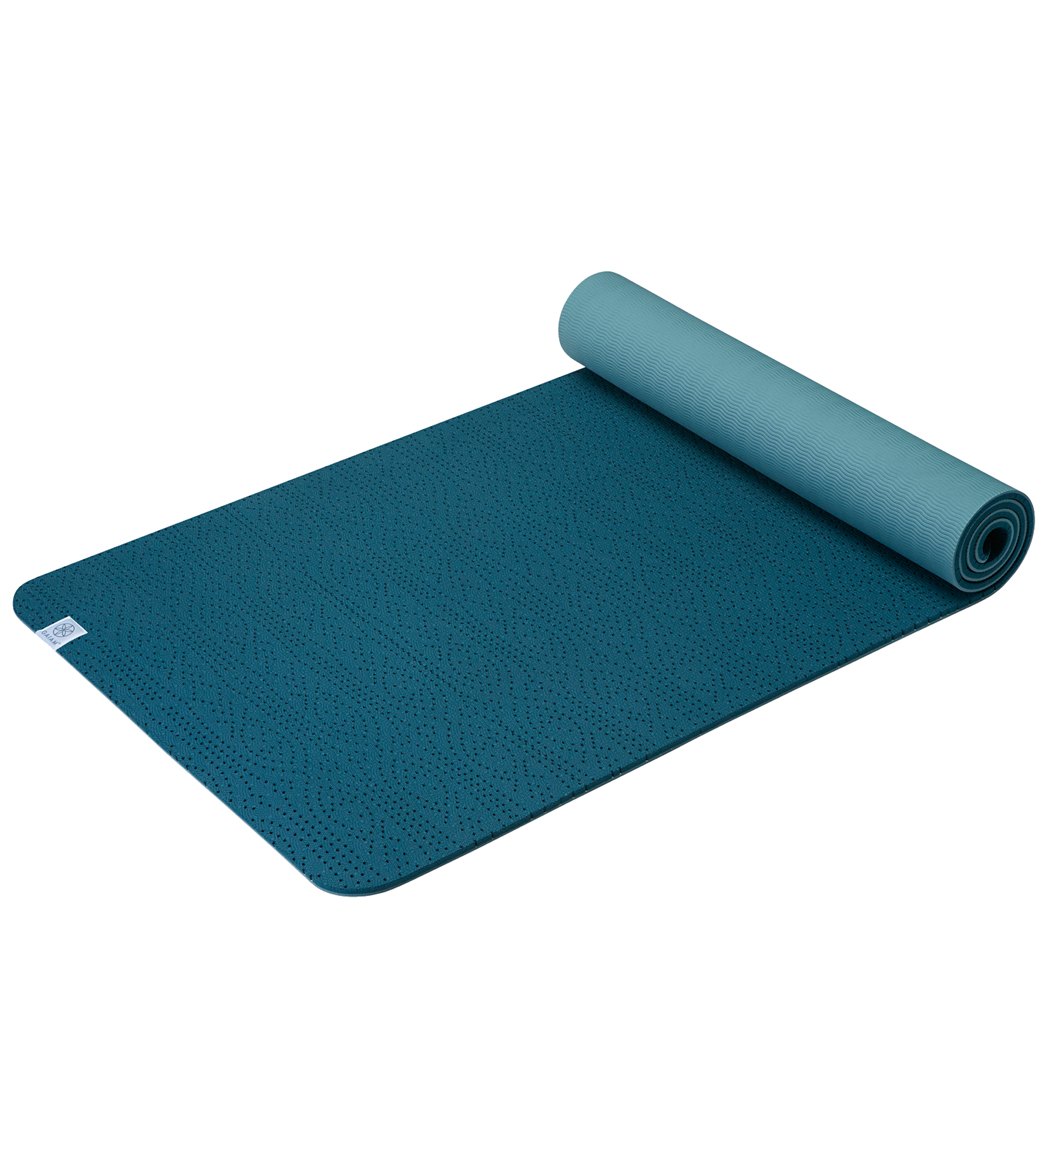 Gaiam Breathable Performance Yoga Mat at